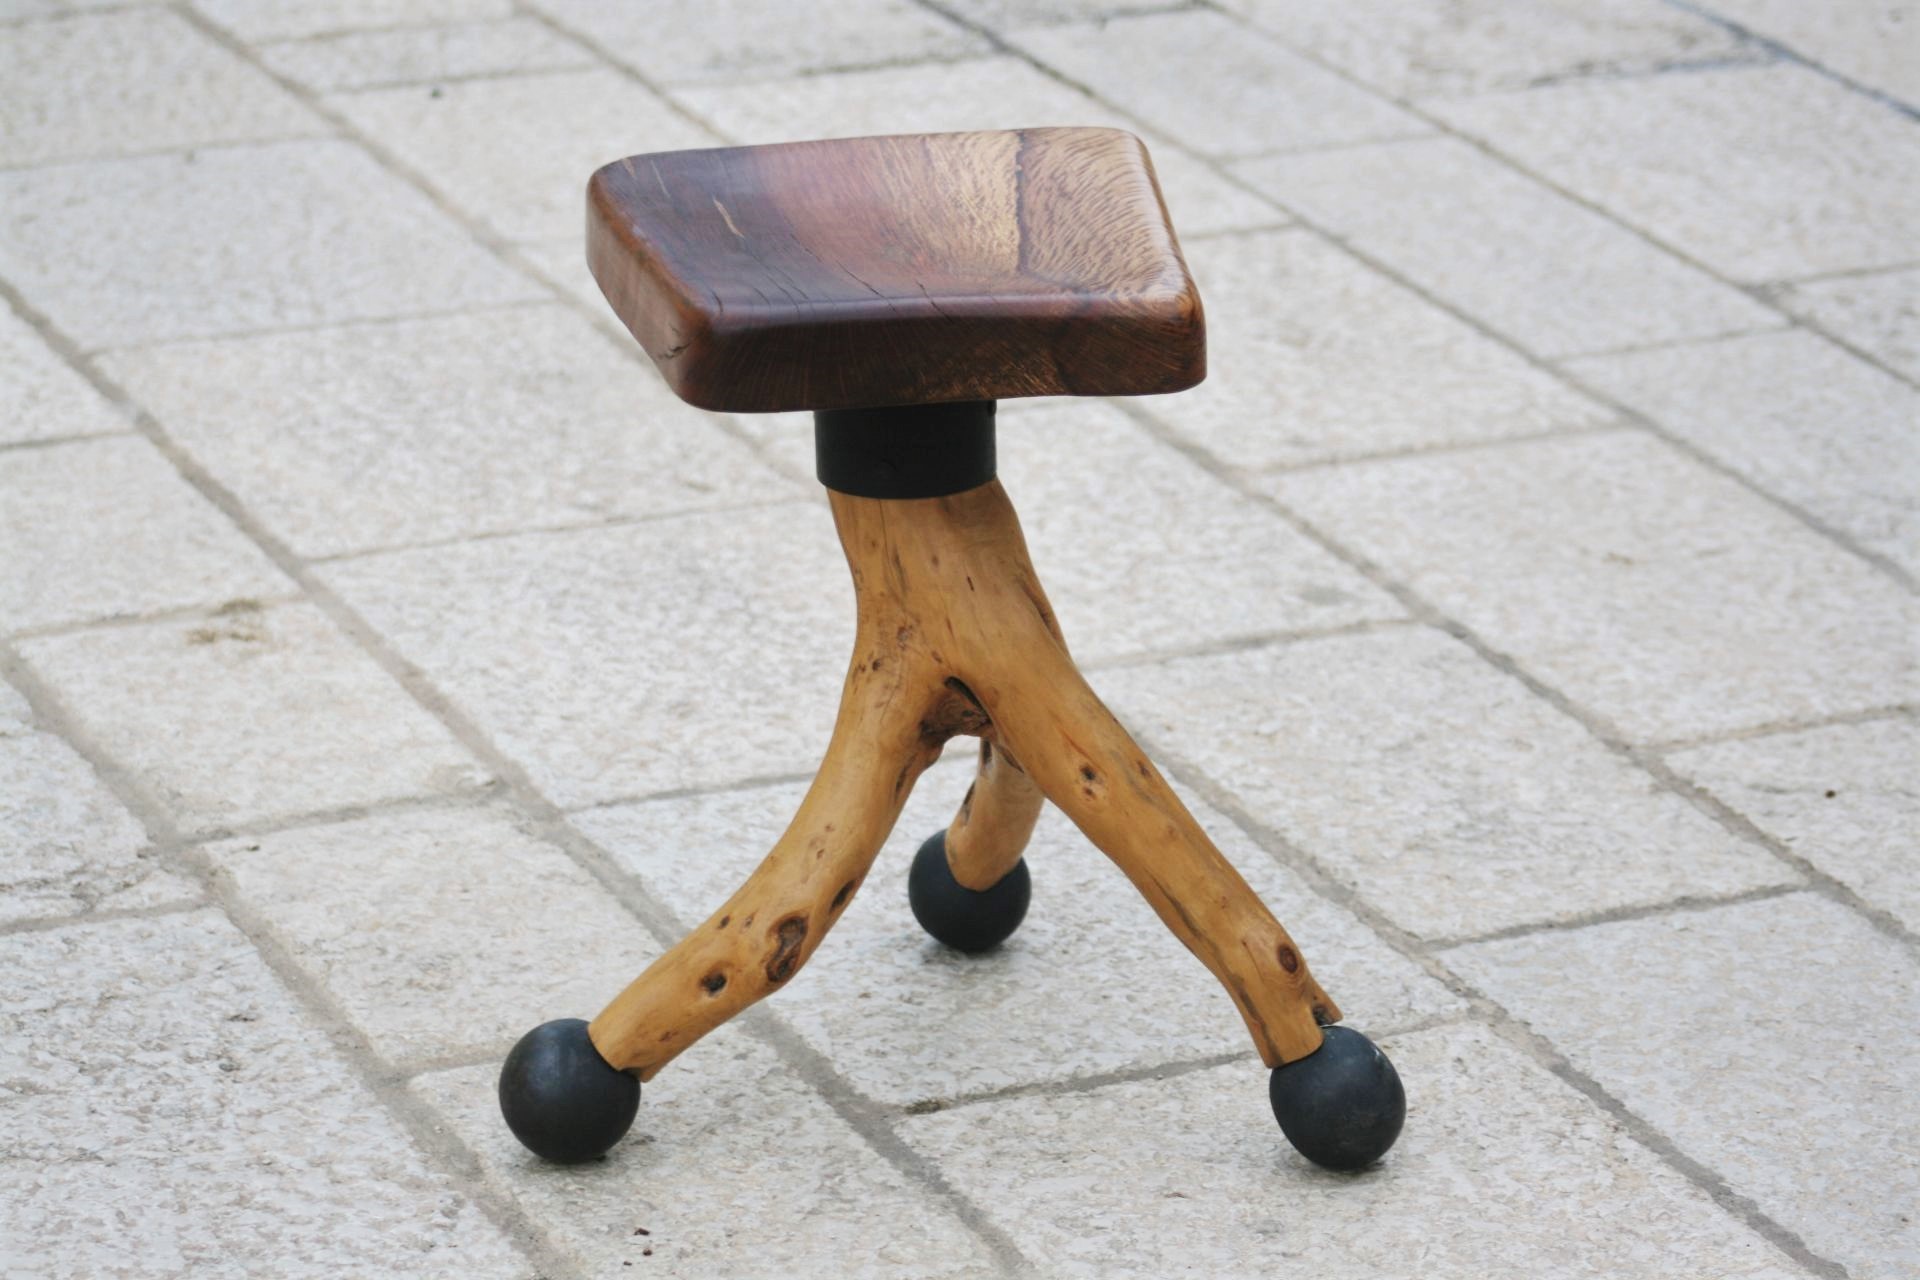 wood interior design art olive wood stool Mediterranean holm oak wood chair handmade unique artist design years old olive wood